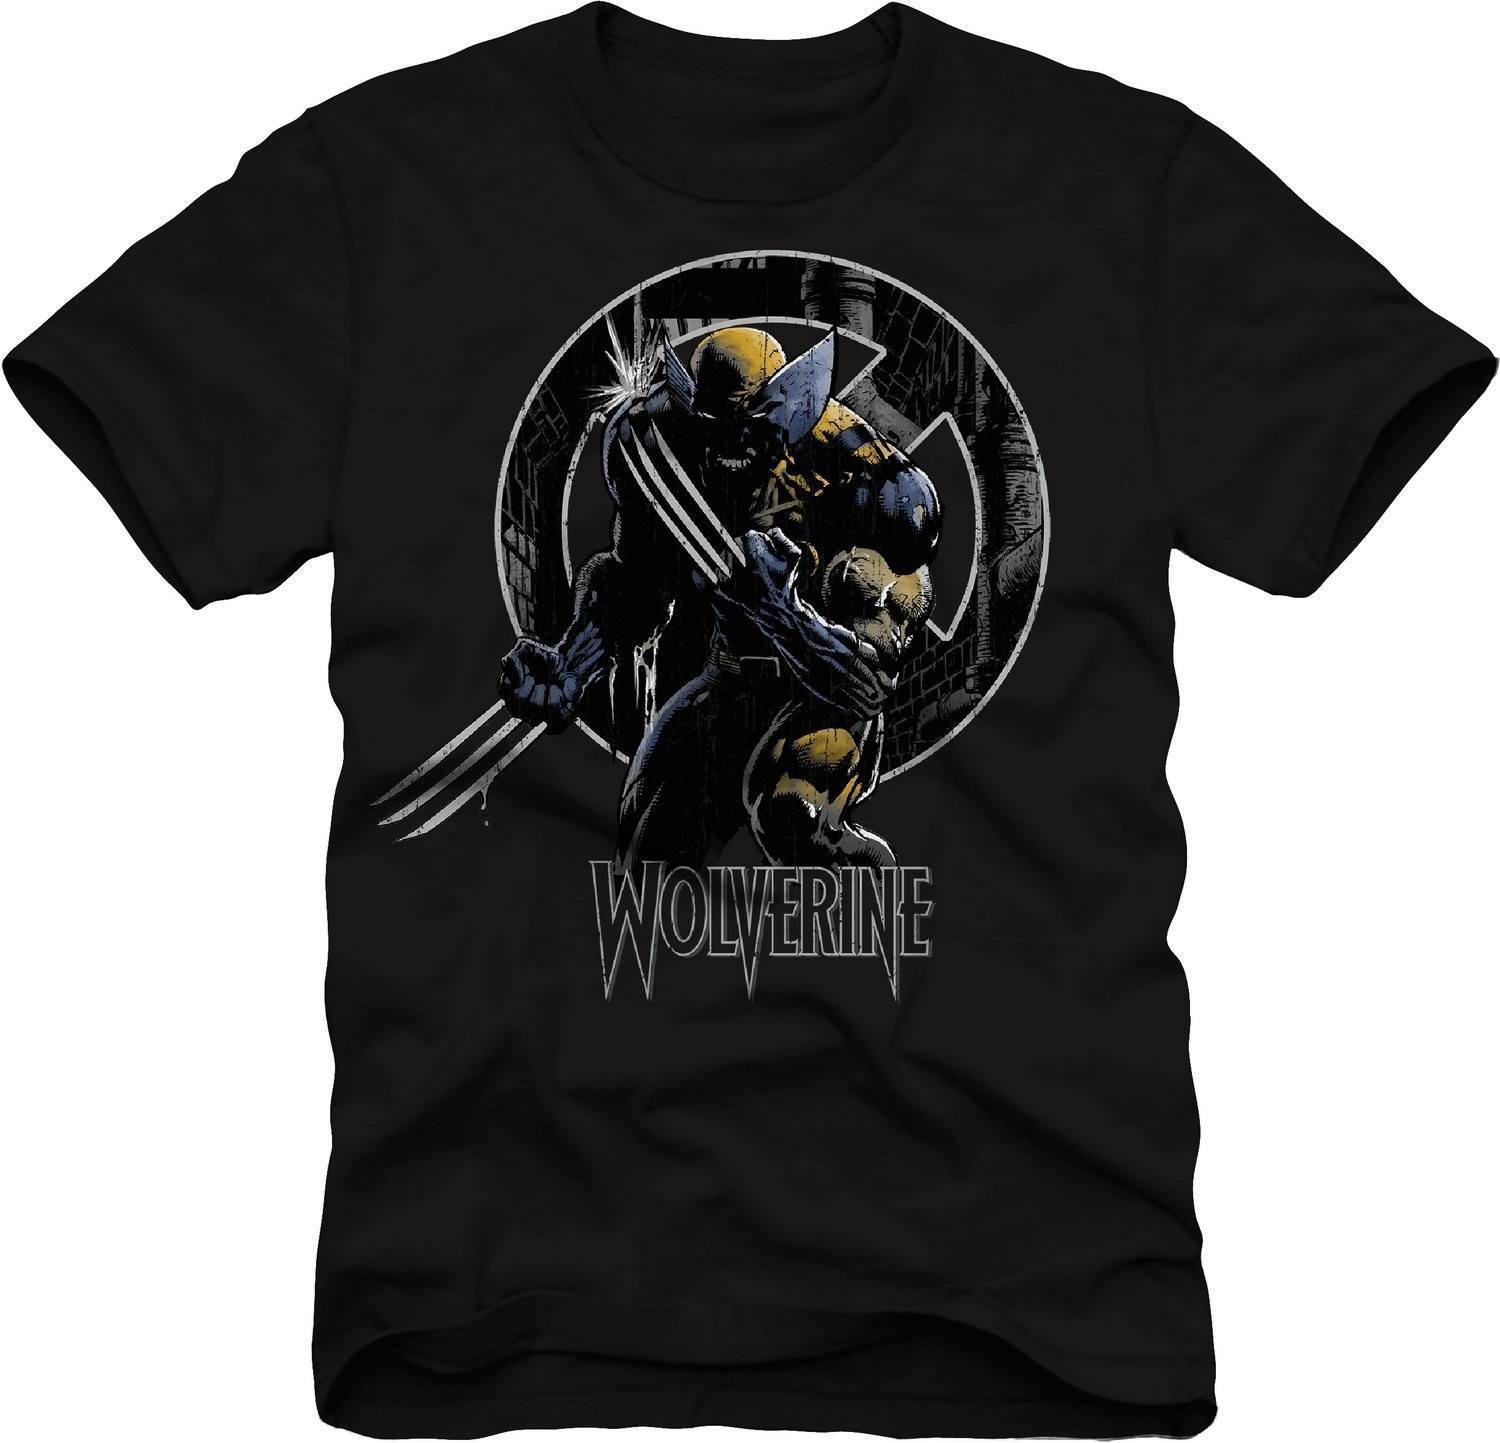 Wolverine Edge of Darkness T-Shirt